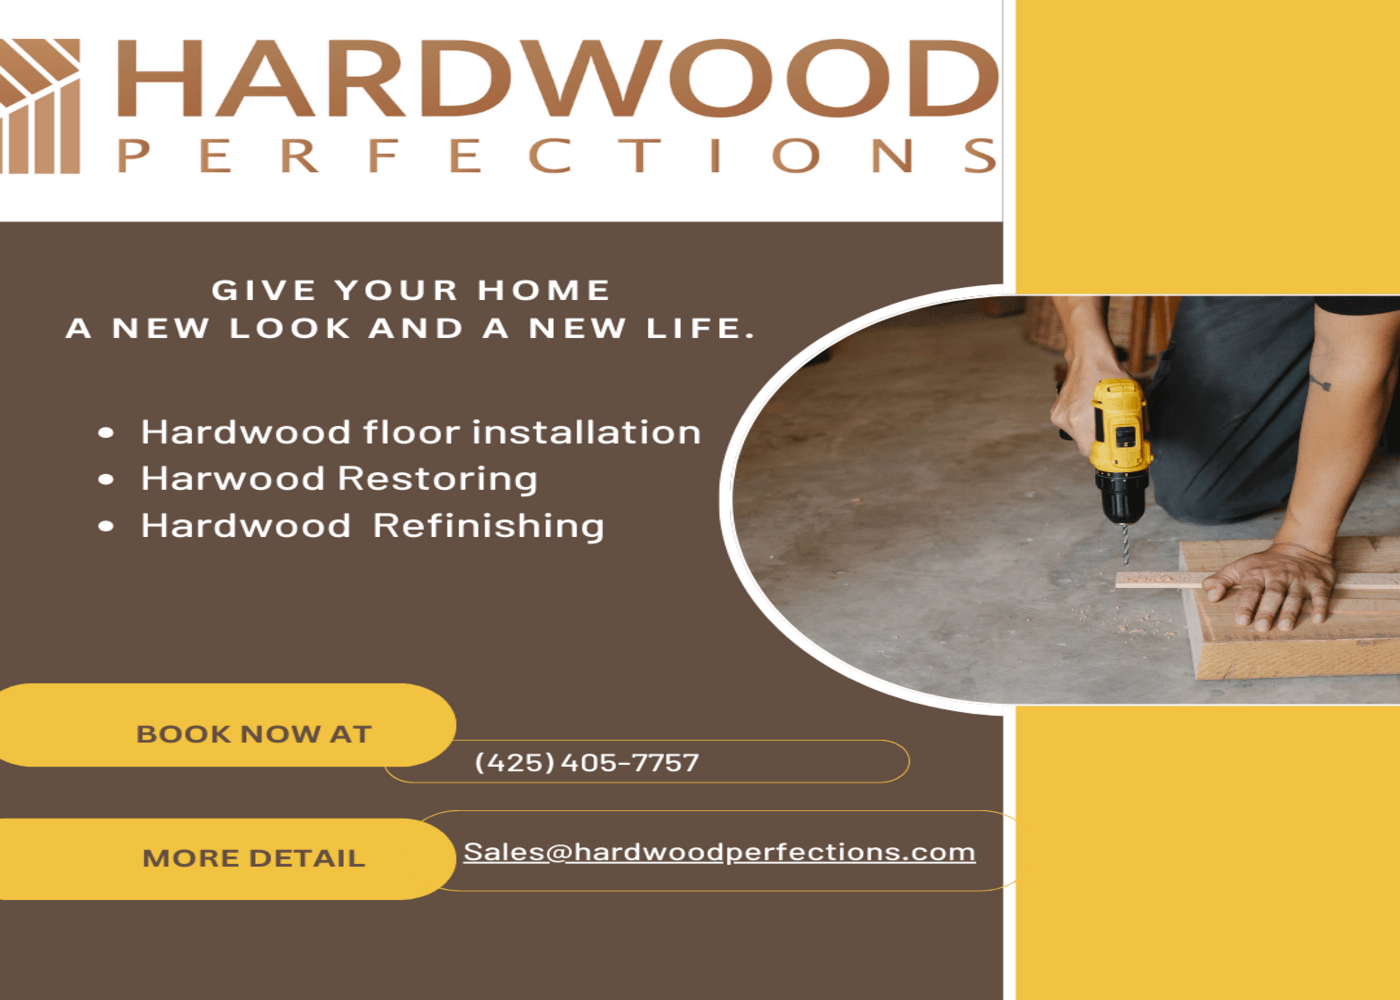 Hardwood Flooring Installation: Experience the Artistry of Hardwood Perfections in Bellevue